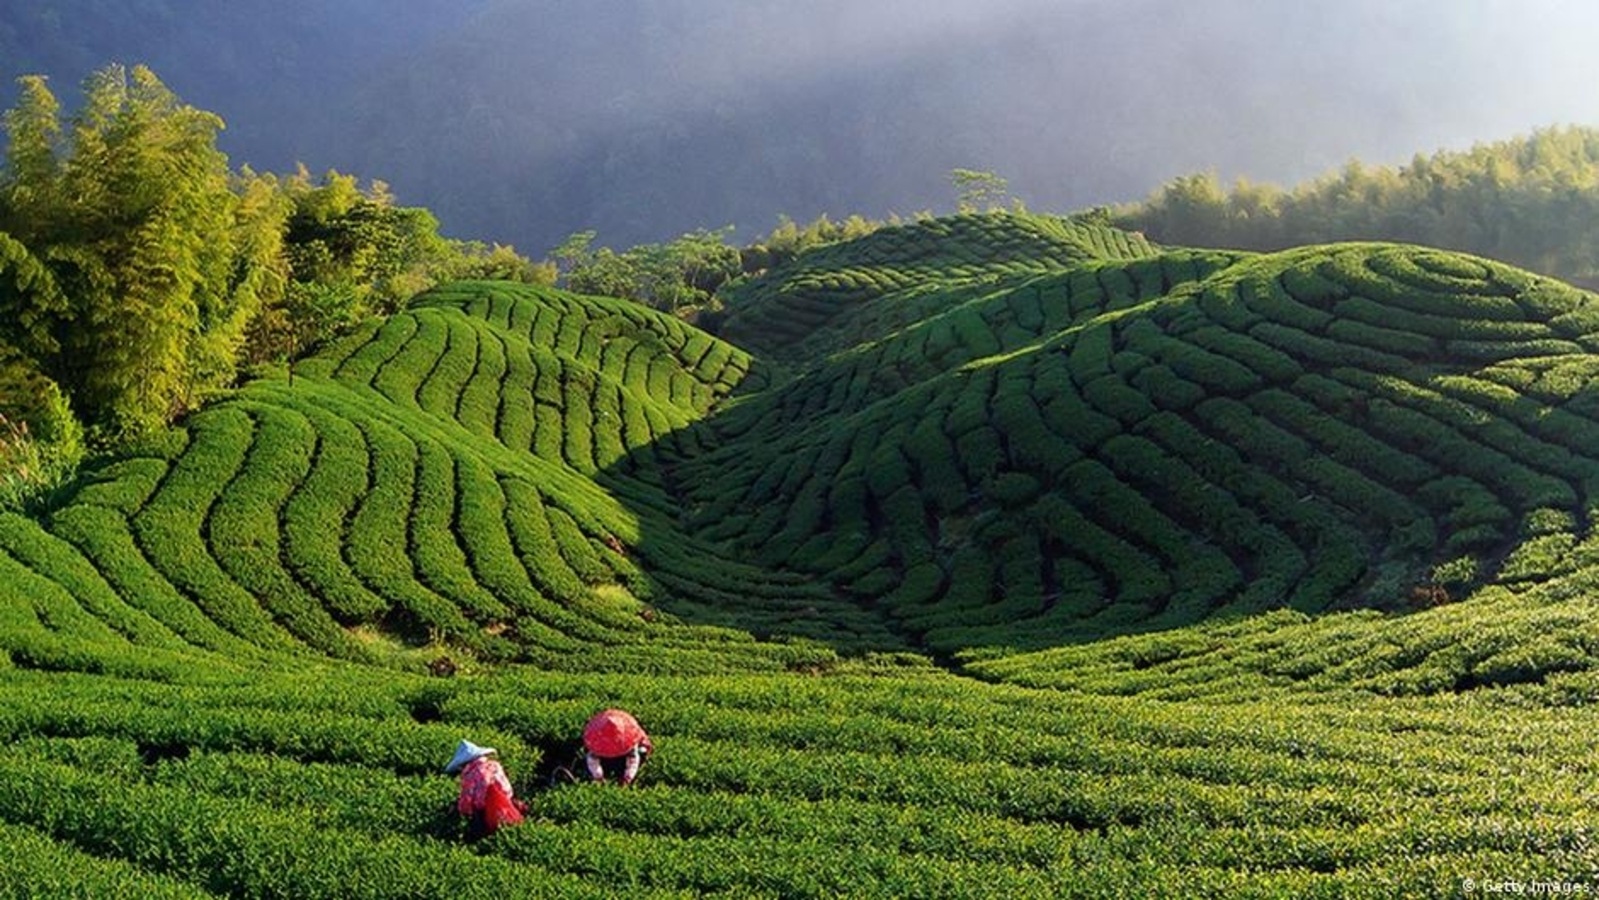 Darjeeling tea industry is in peril. Here's how to fix it - Hindustan Times